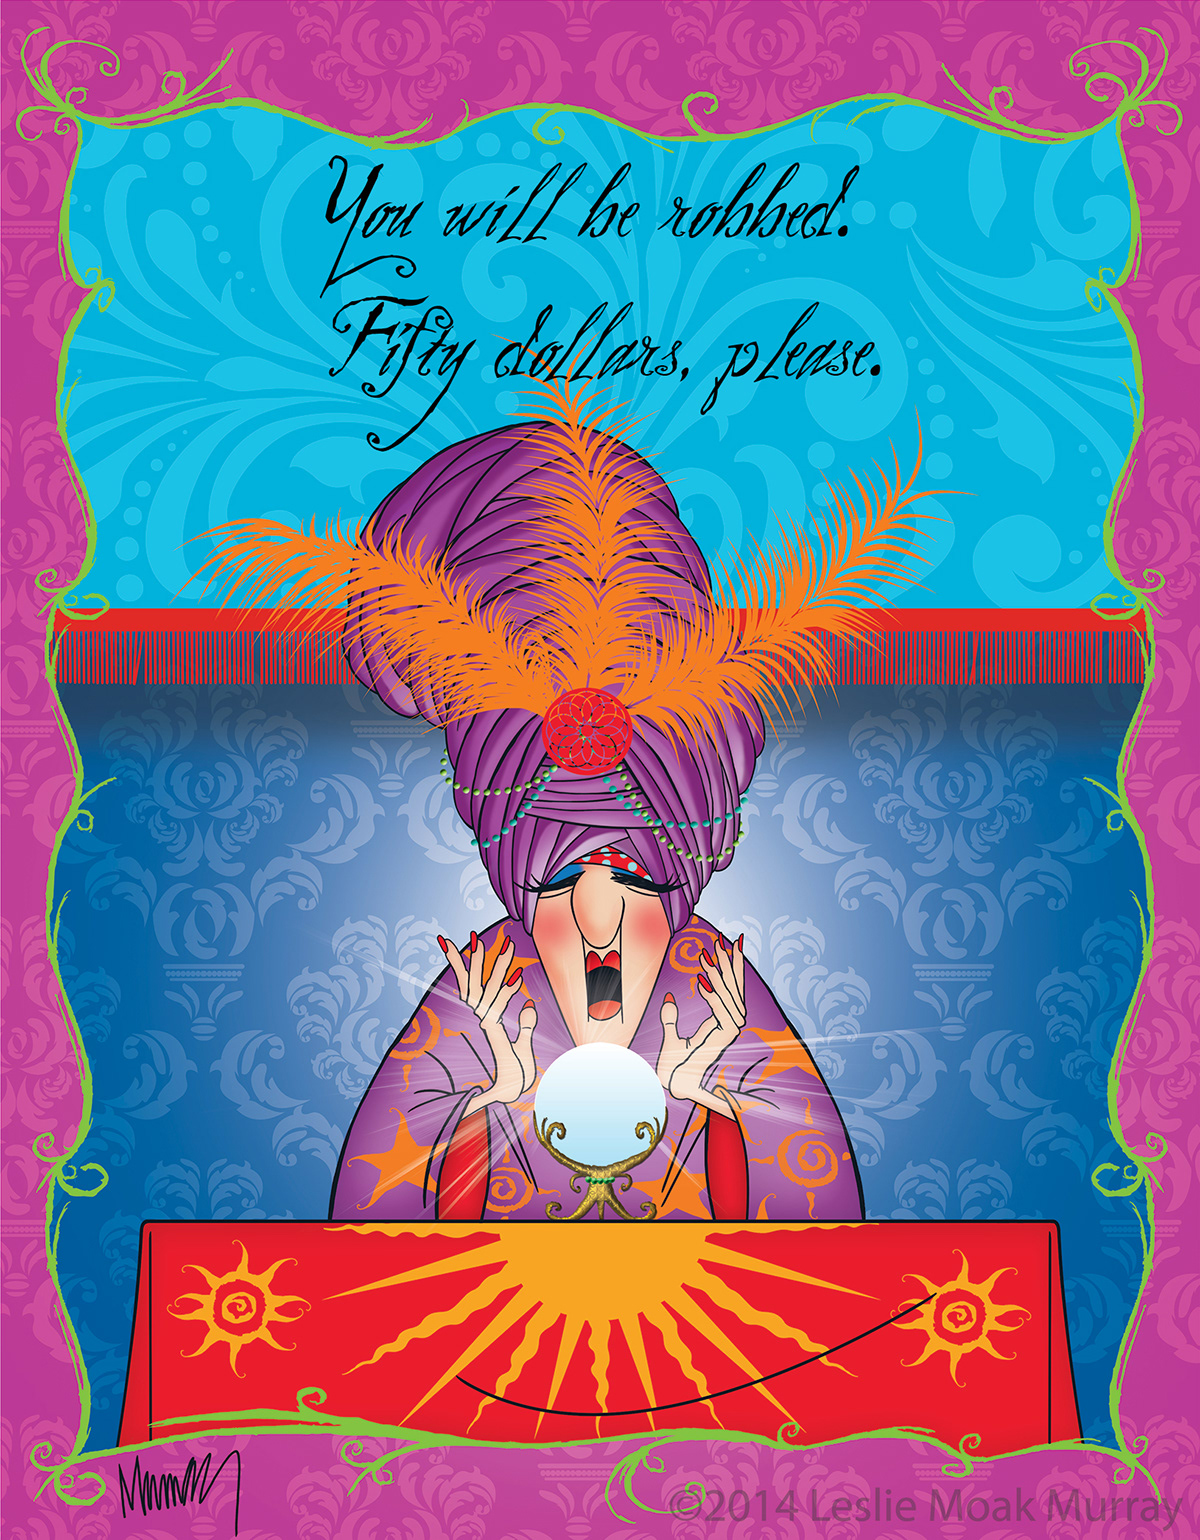 Cartoons humor fortune teller gypsy funny crystal ball predictions colorful turban